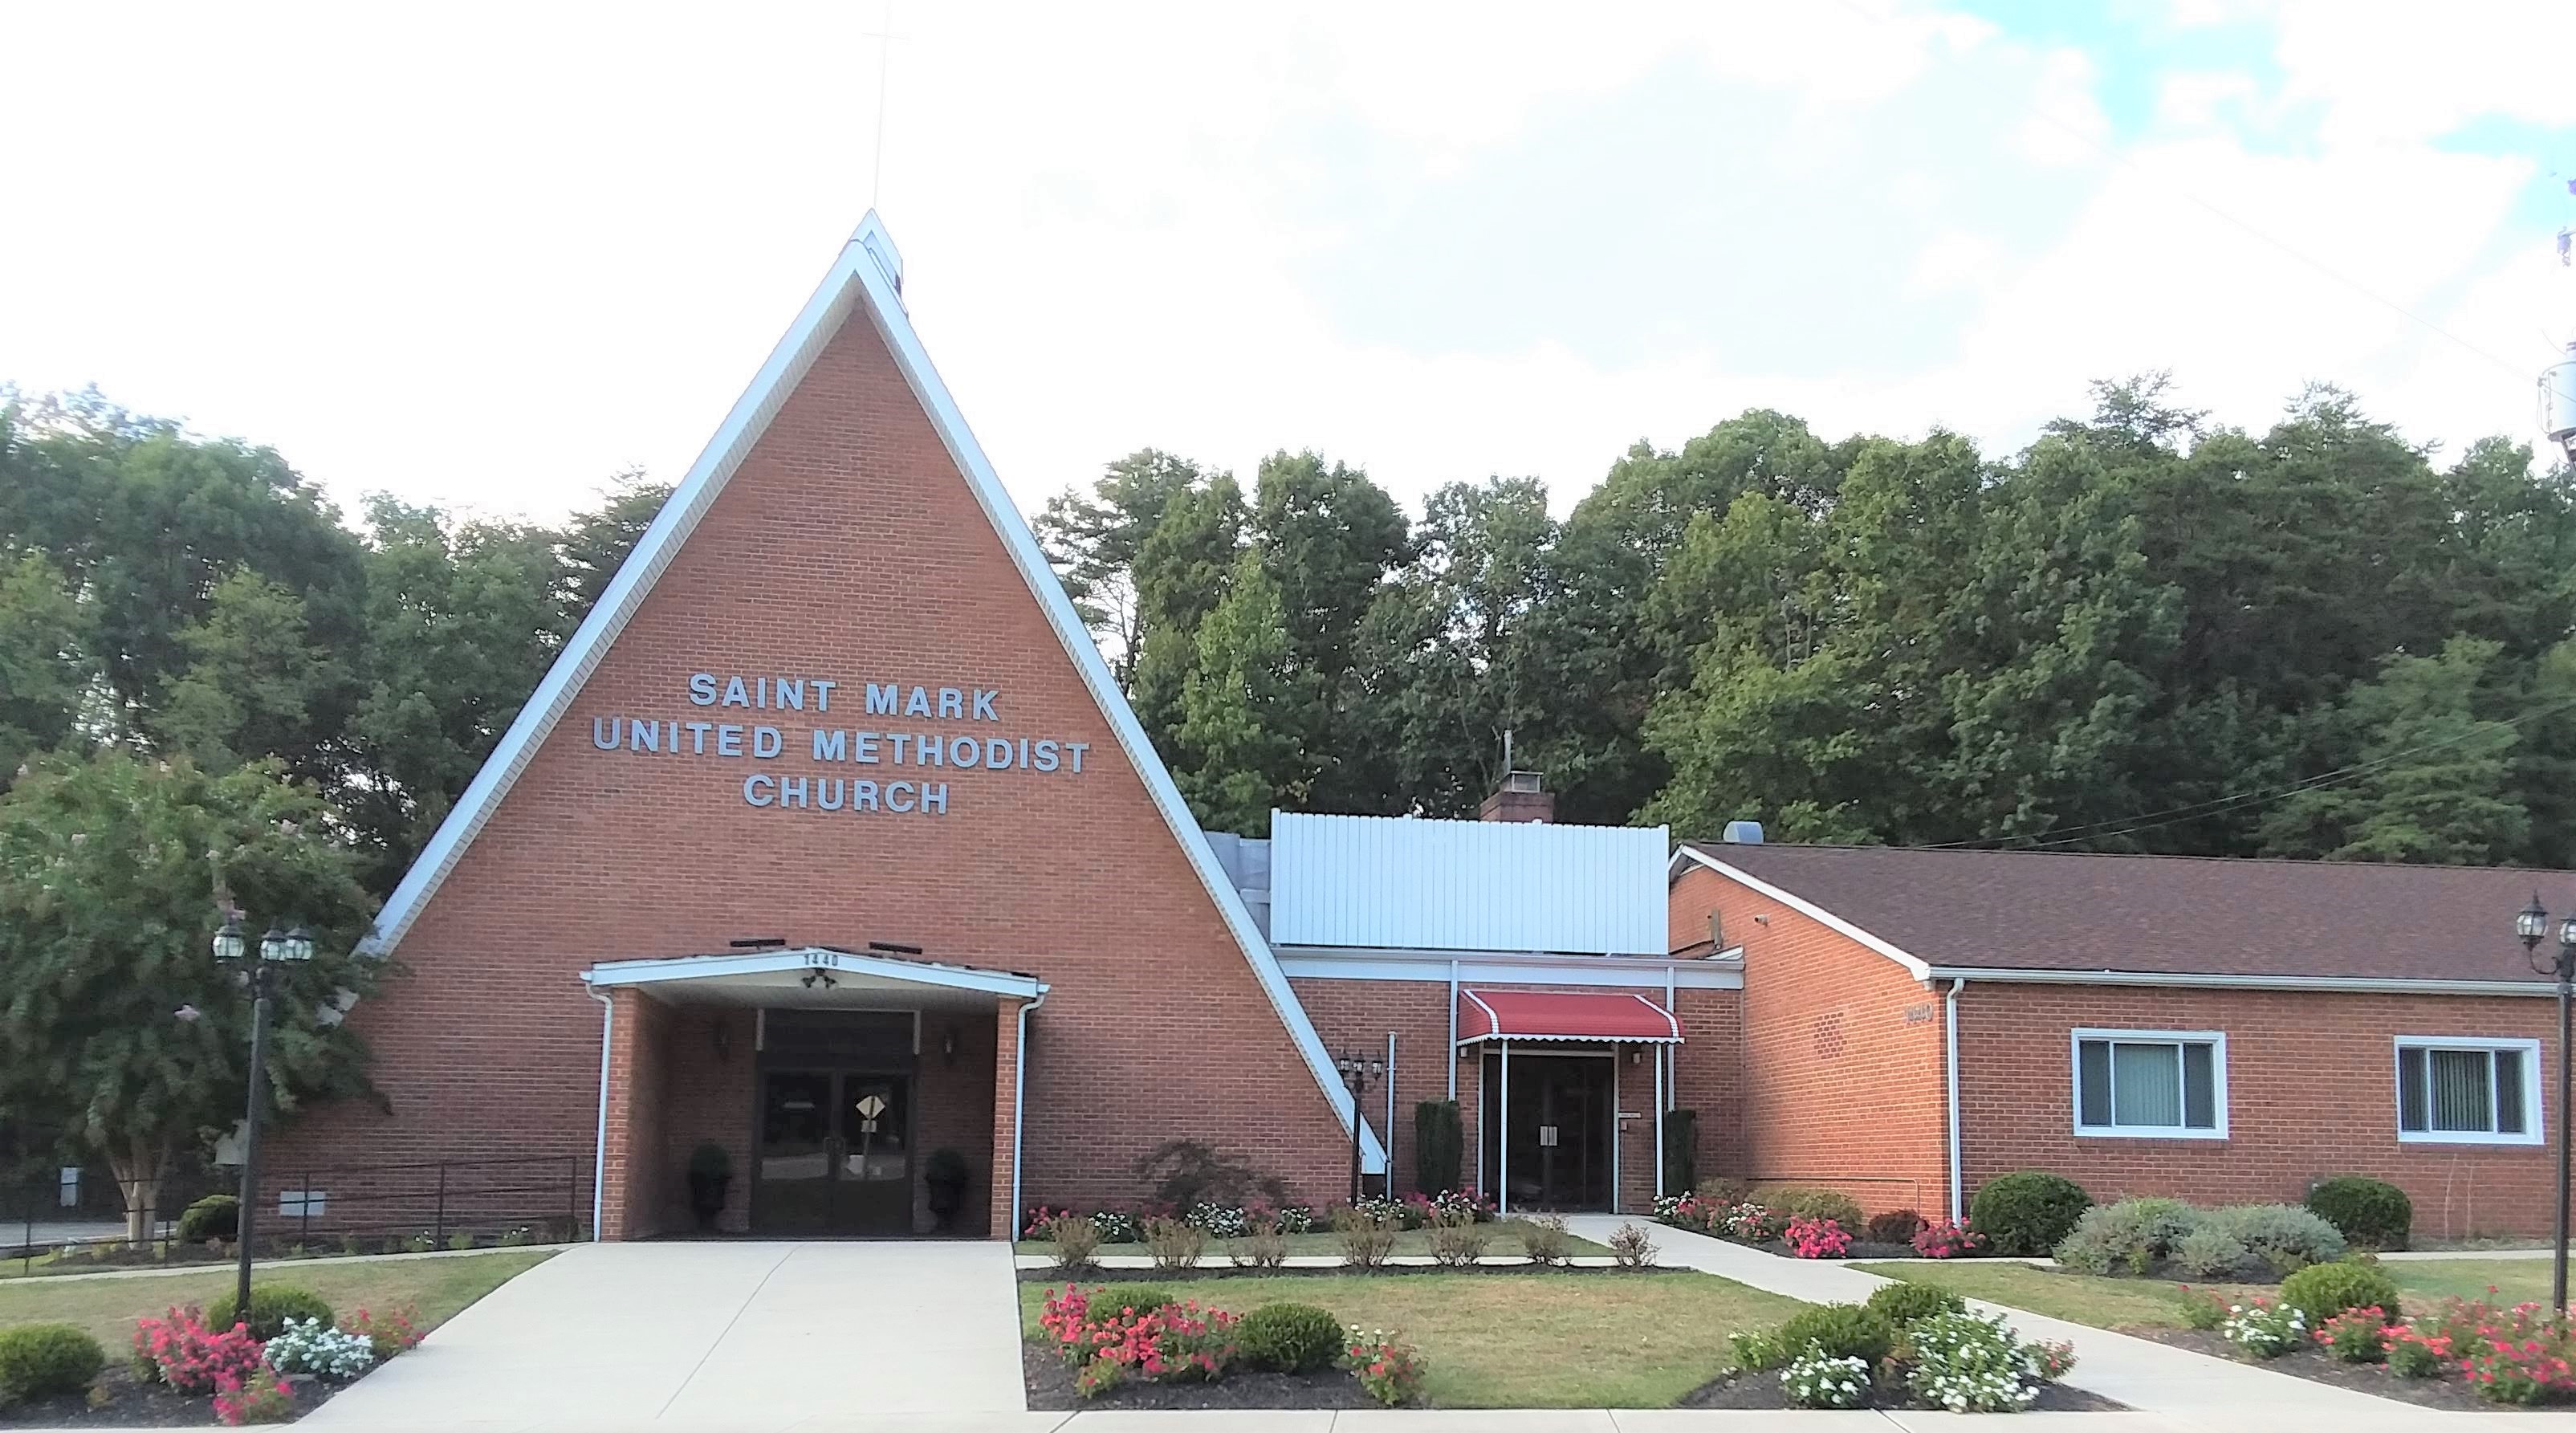 Saint Mark United Methodist Church, Hanover, Maryland Building Photo